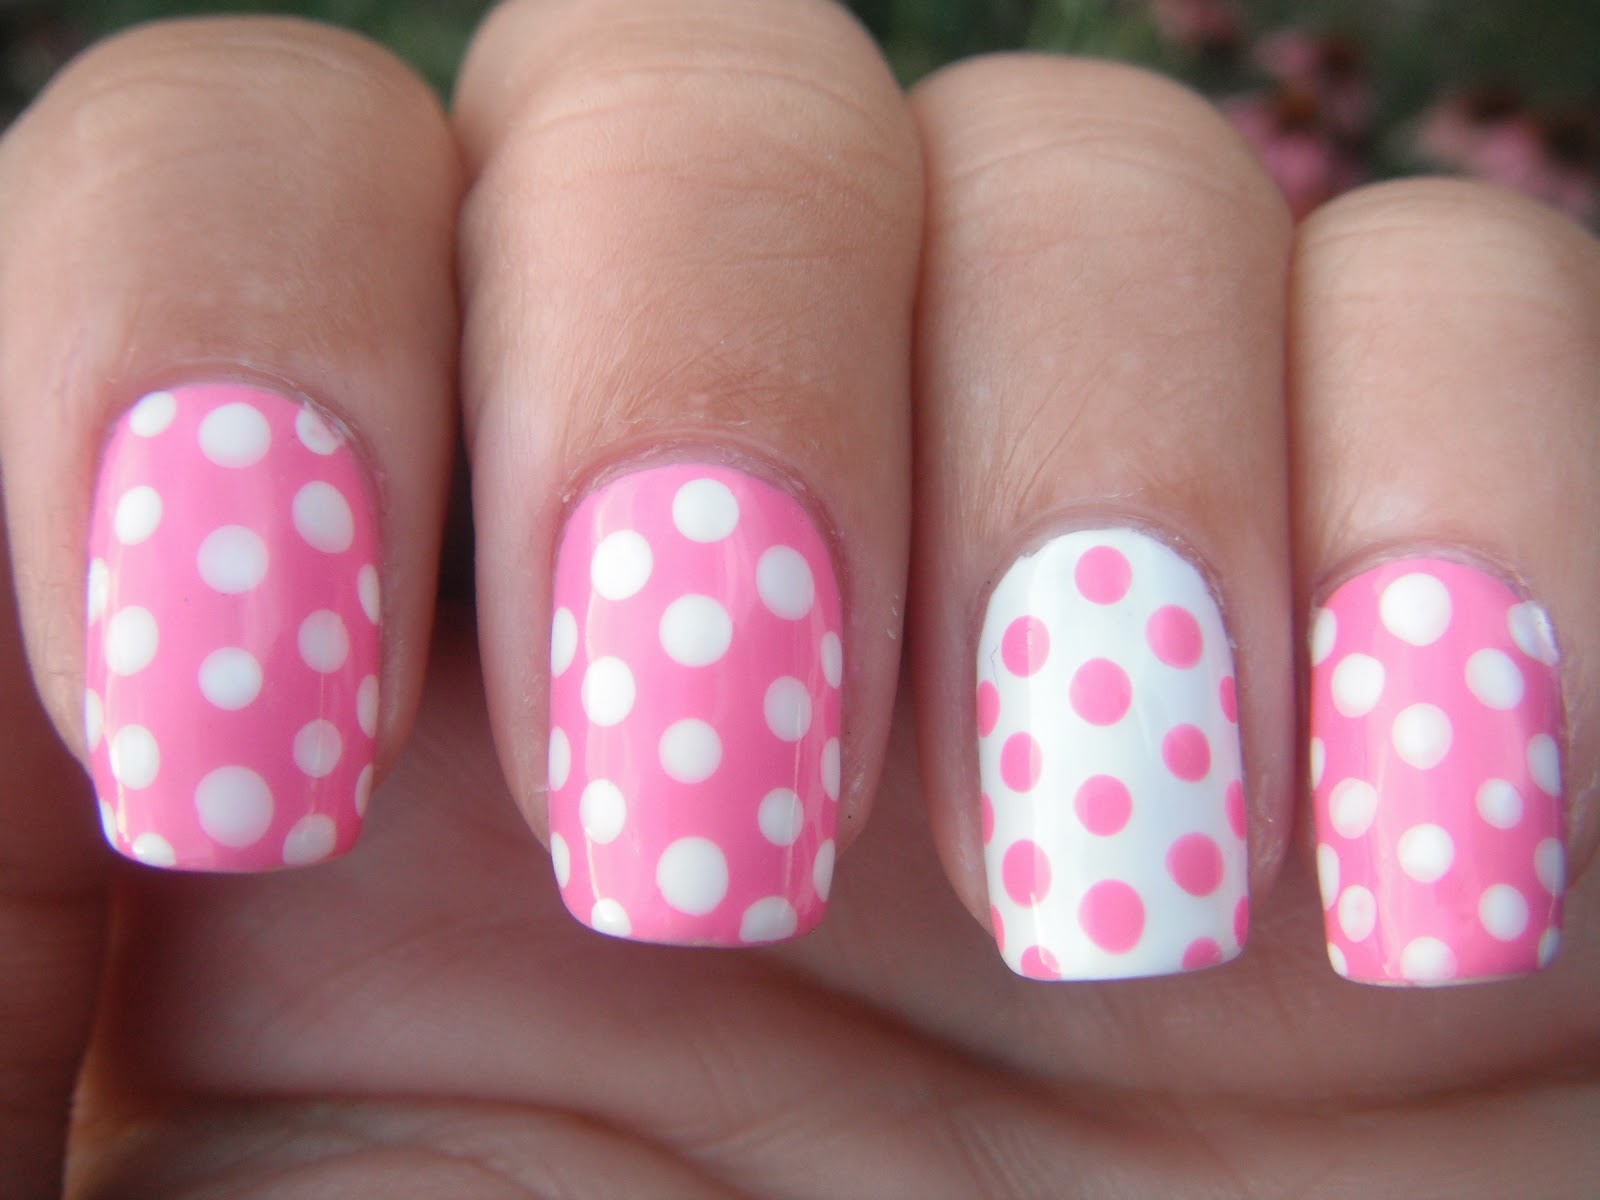 3. "Cute Polka Dot Nails for Homecoming" - wide 2